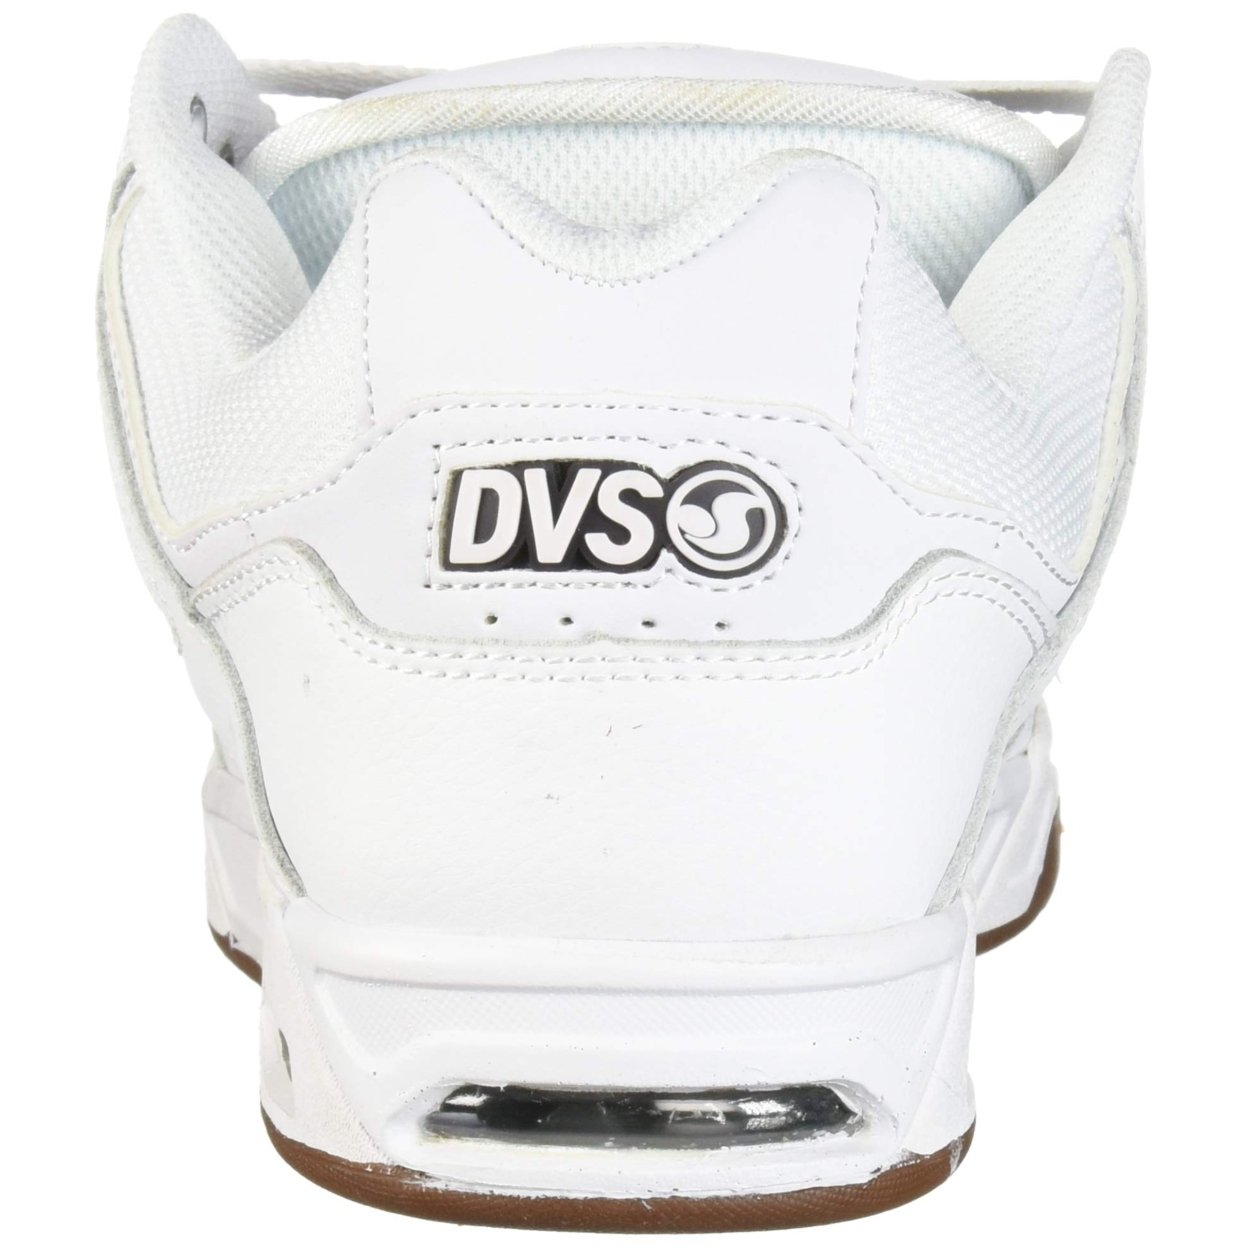 Dvs Footwear Mens Men's Enduro HEIR Skate Shoe WHITE GUM NUBUCK - WHITE GUM NUBUCK, 9.5-M